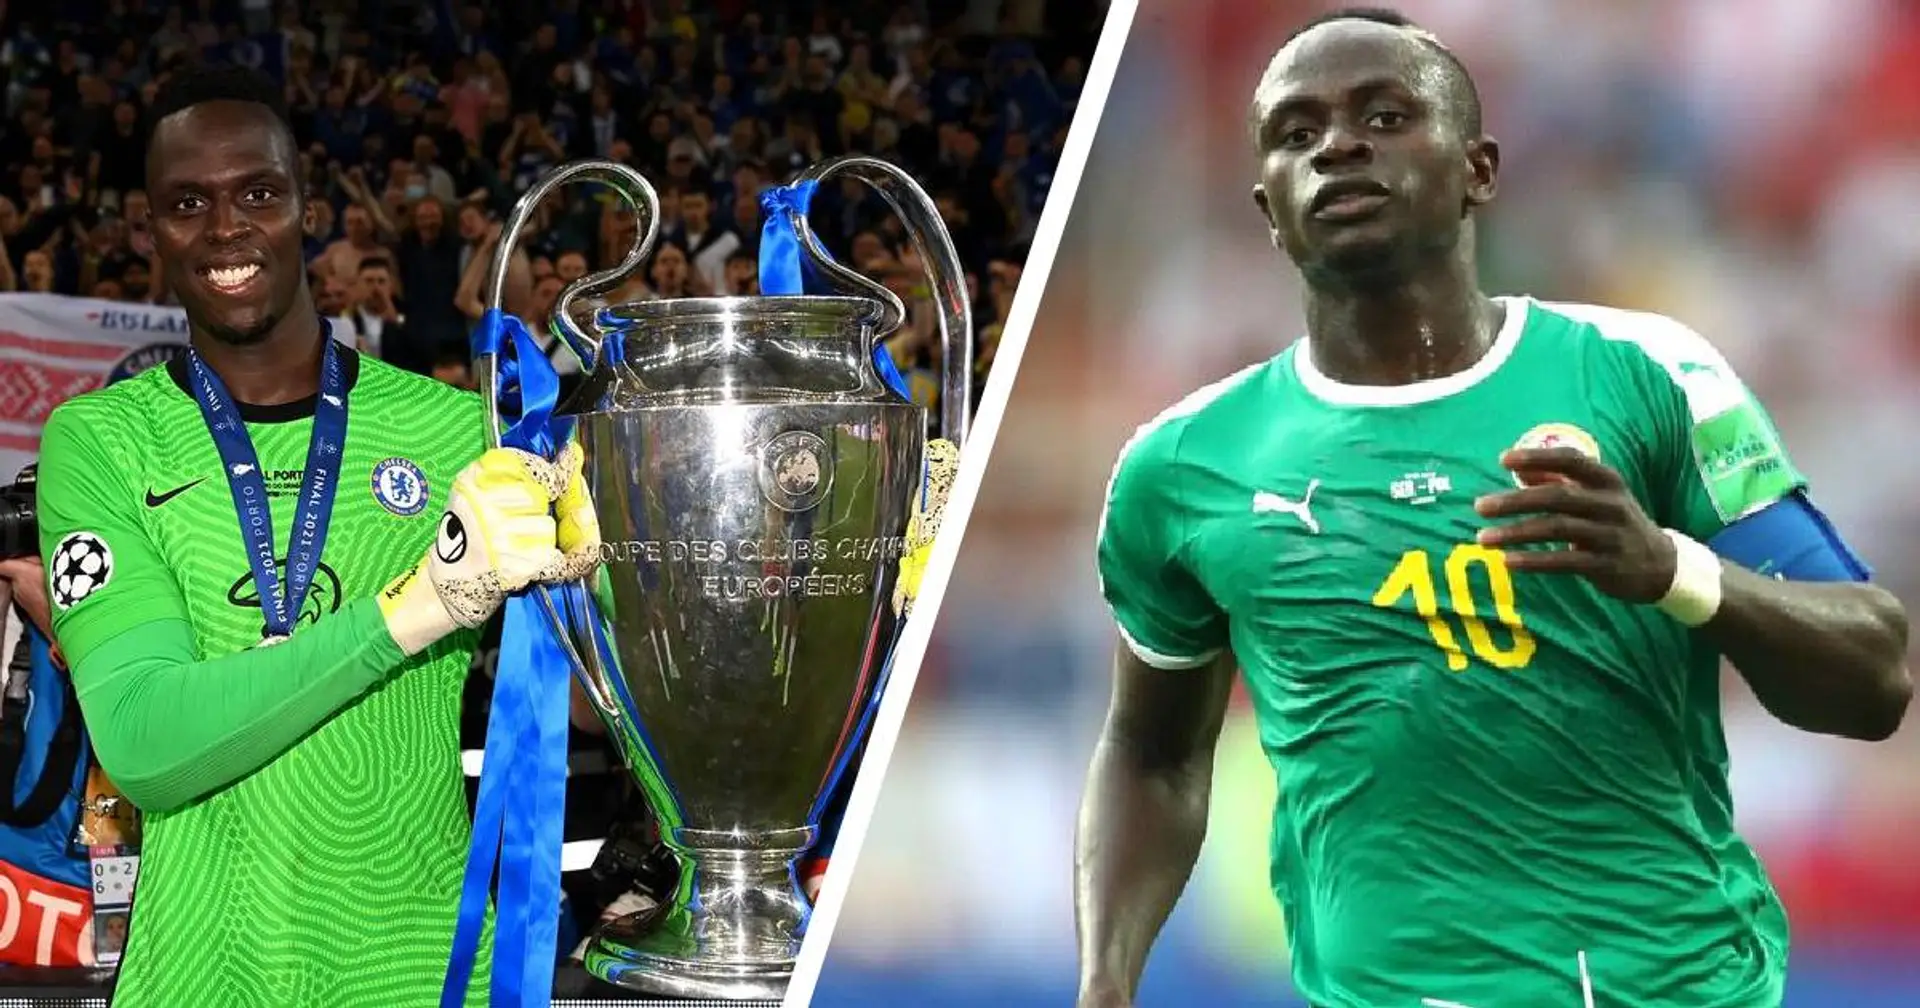 Mendy wins Senegalese Player of the Year award by huge margin, ending Sadio Mane's 6-year streak